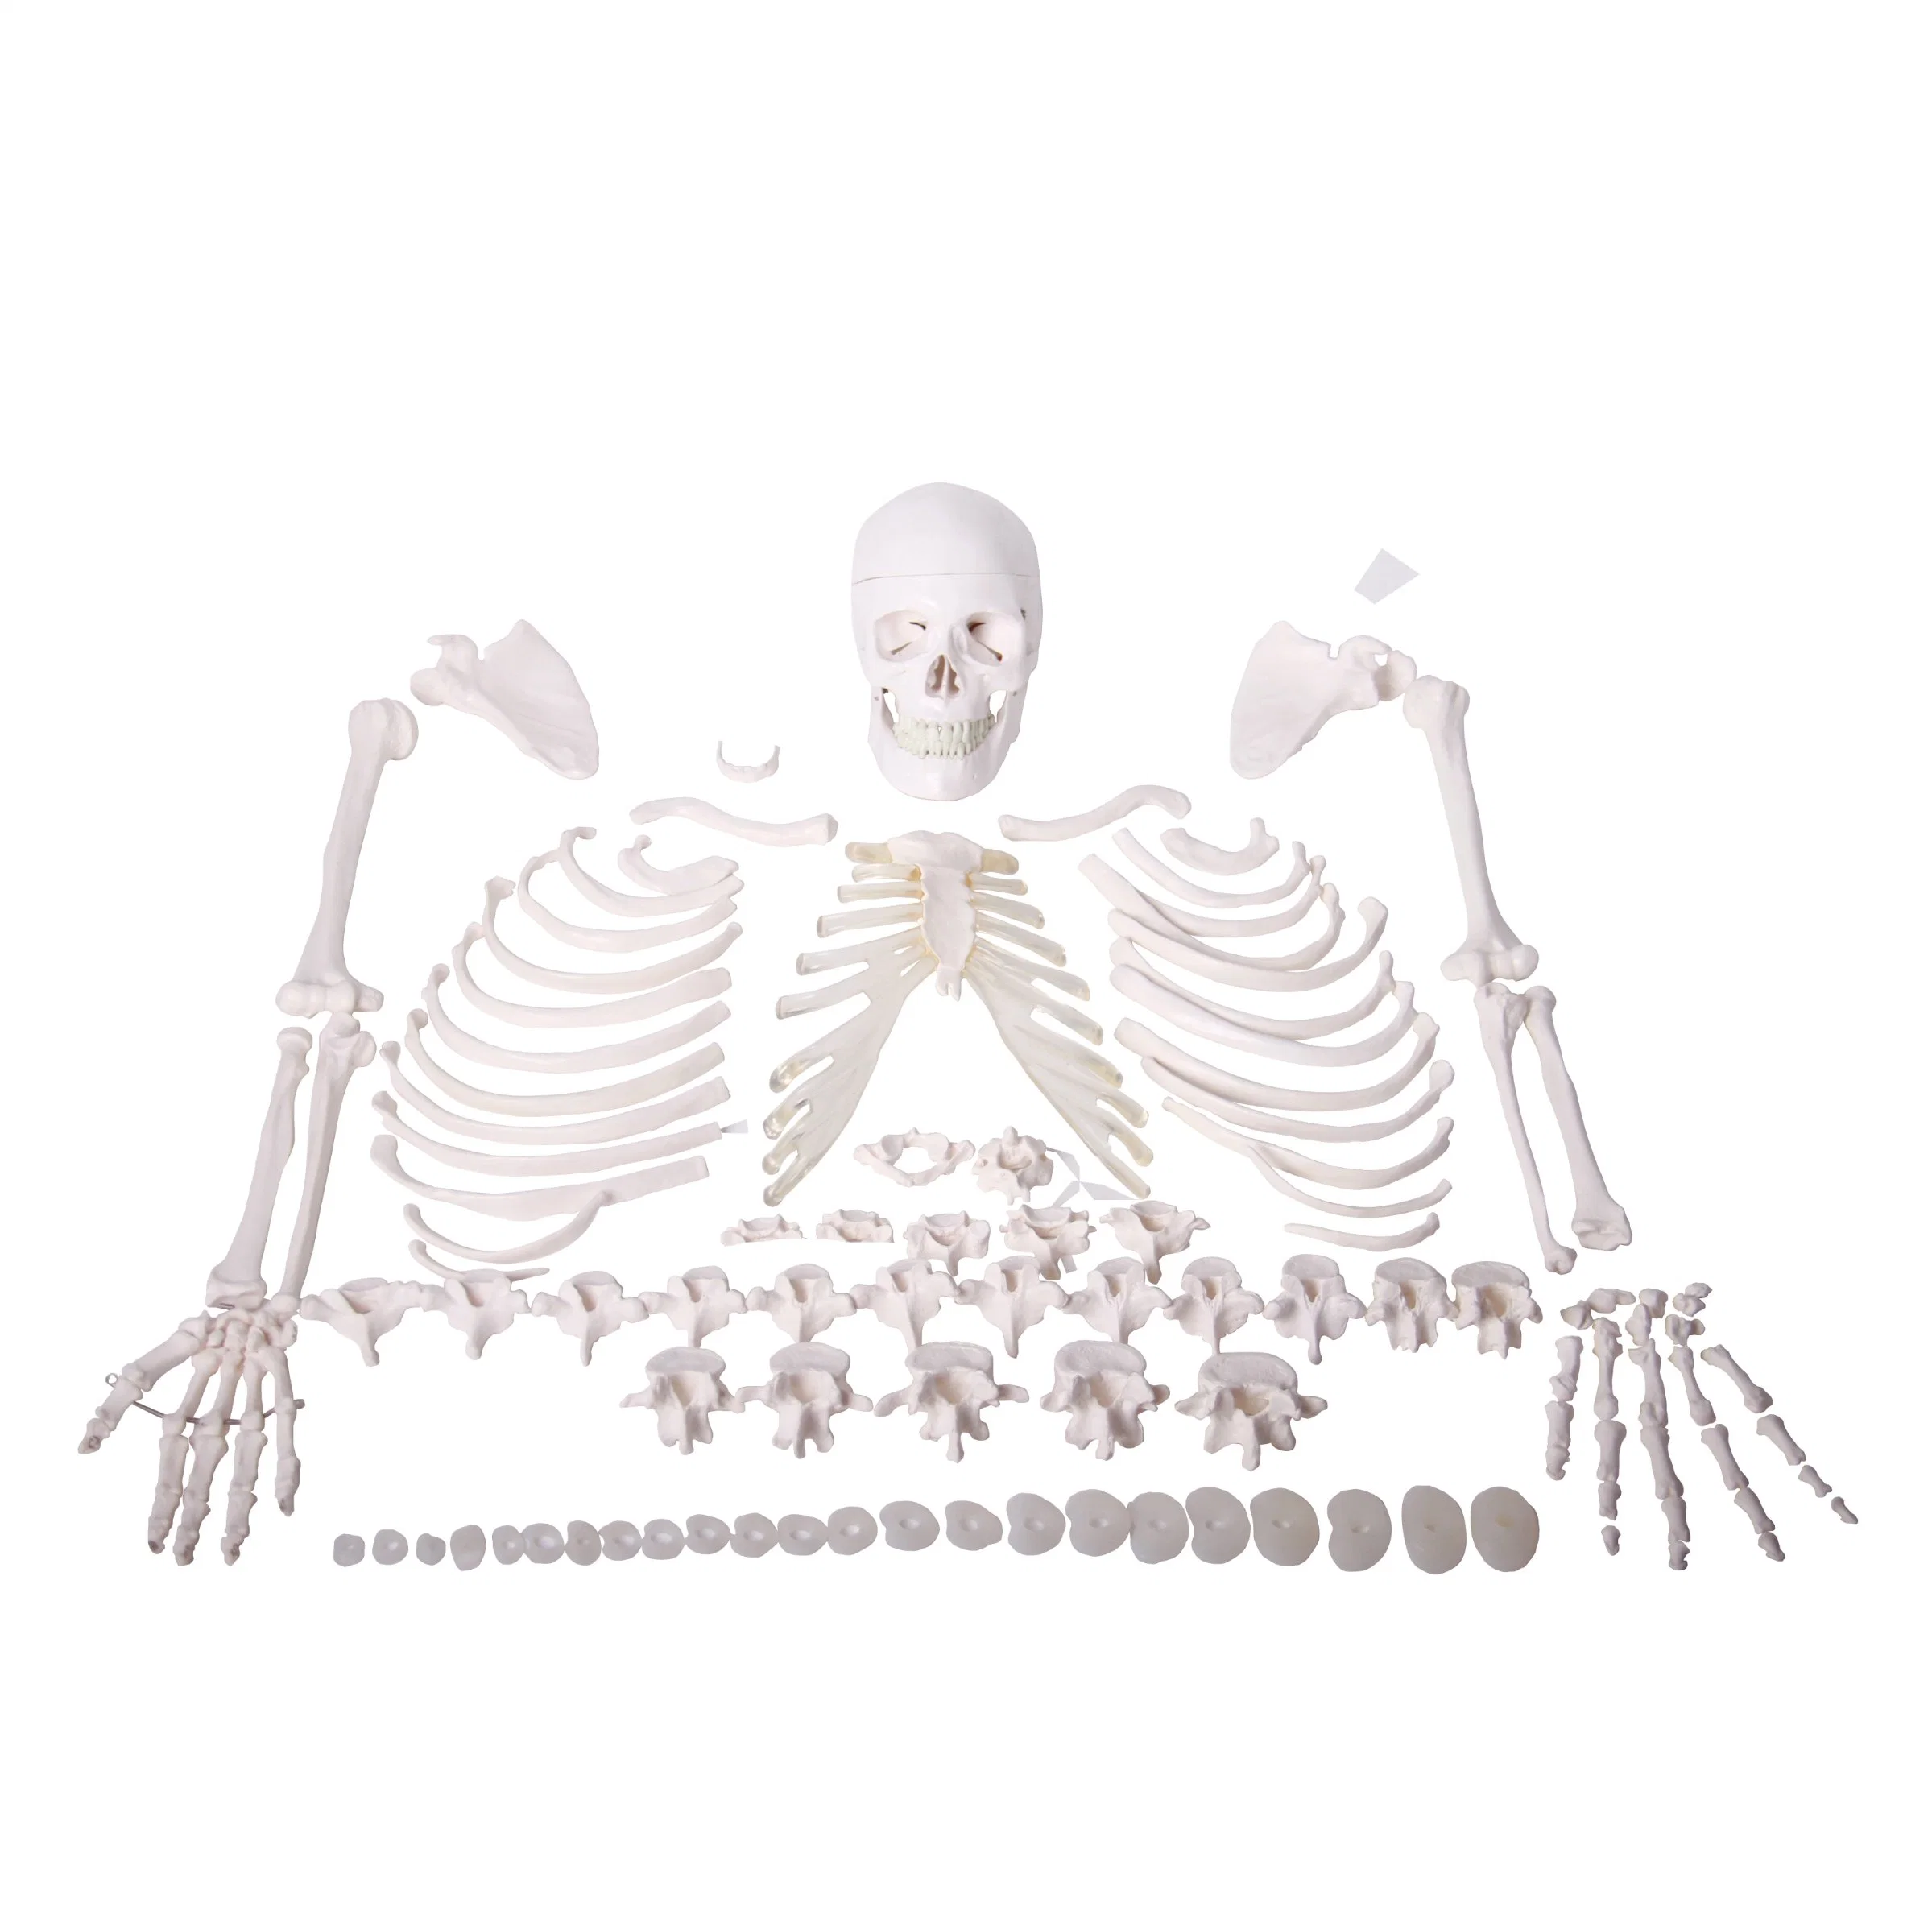 High Quality PVC Humam Anatomical Model Human Body Skeleton Half of The Model